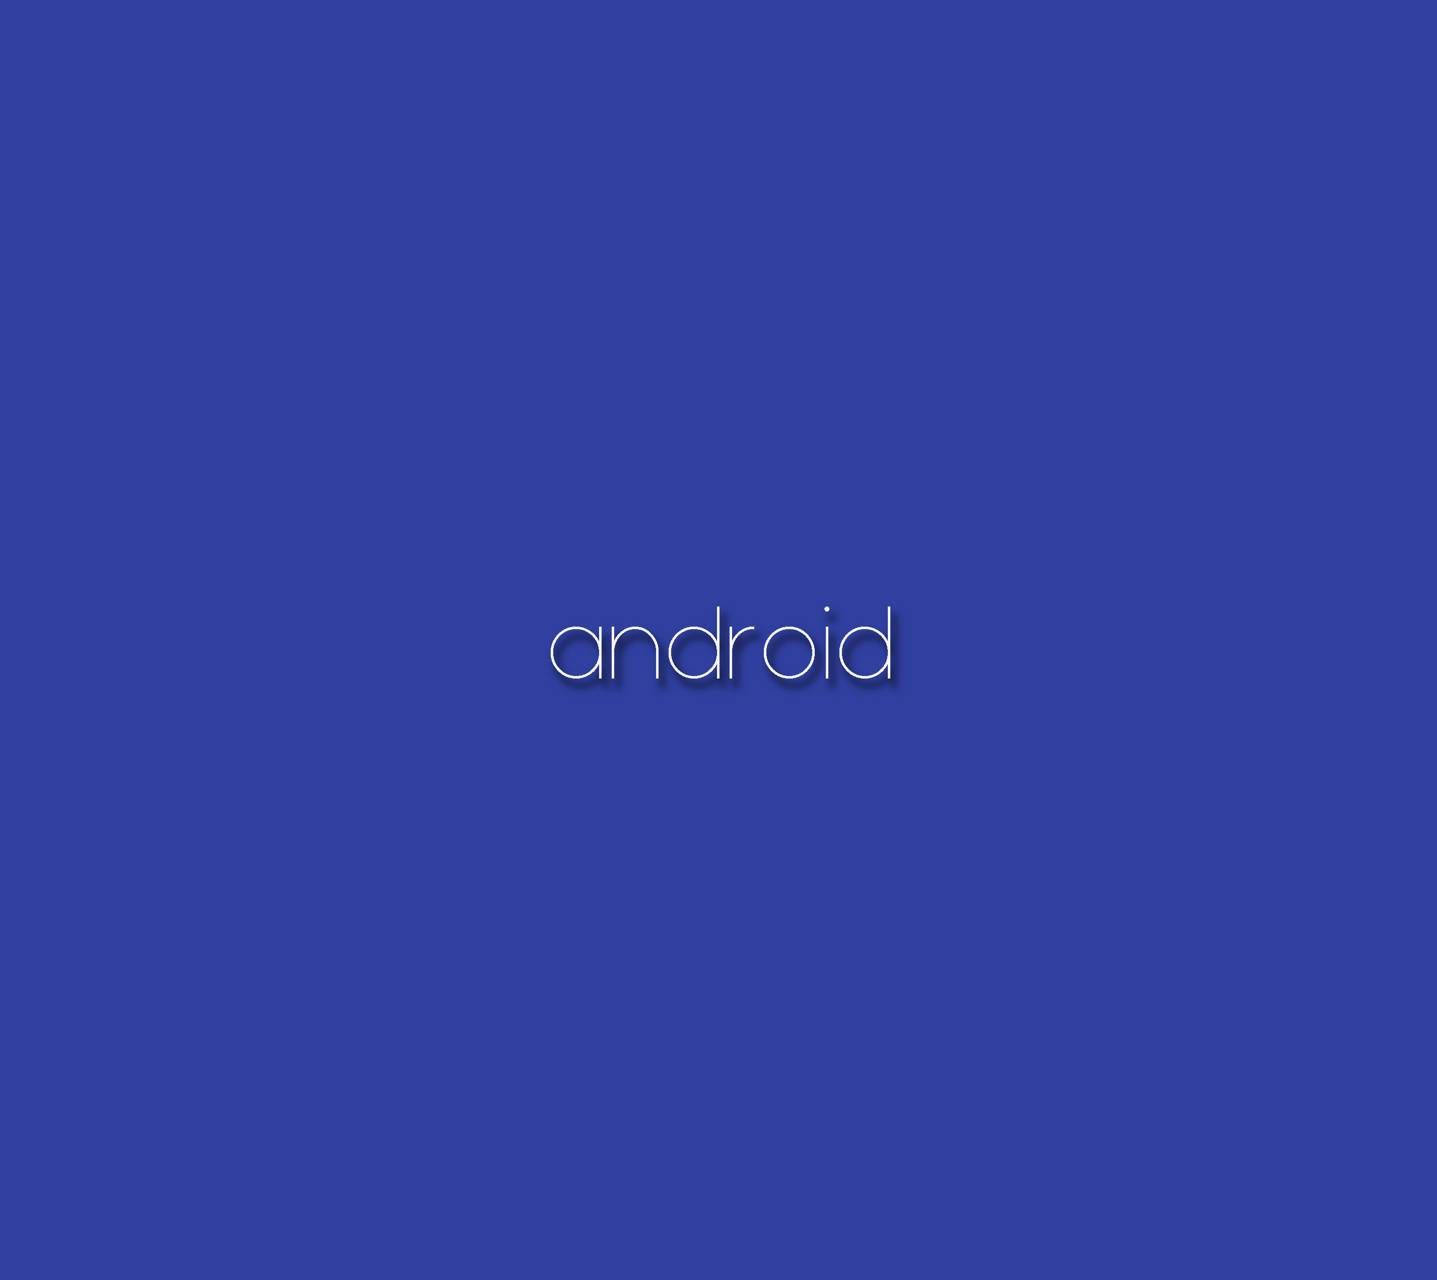 Plain Text Android Developer Wallpaper